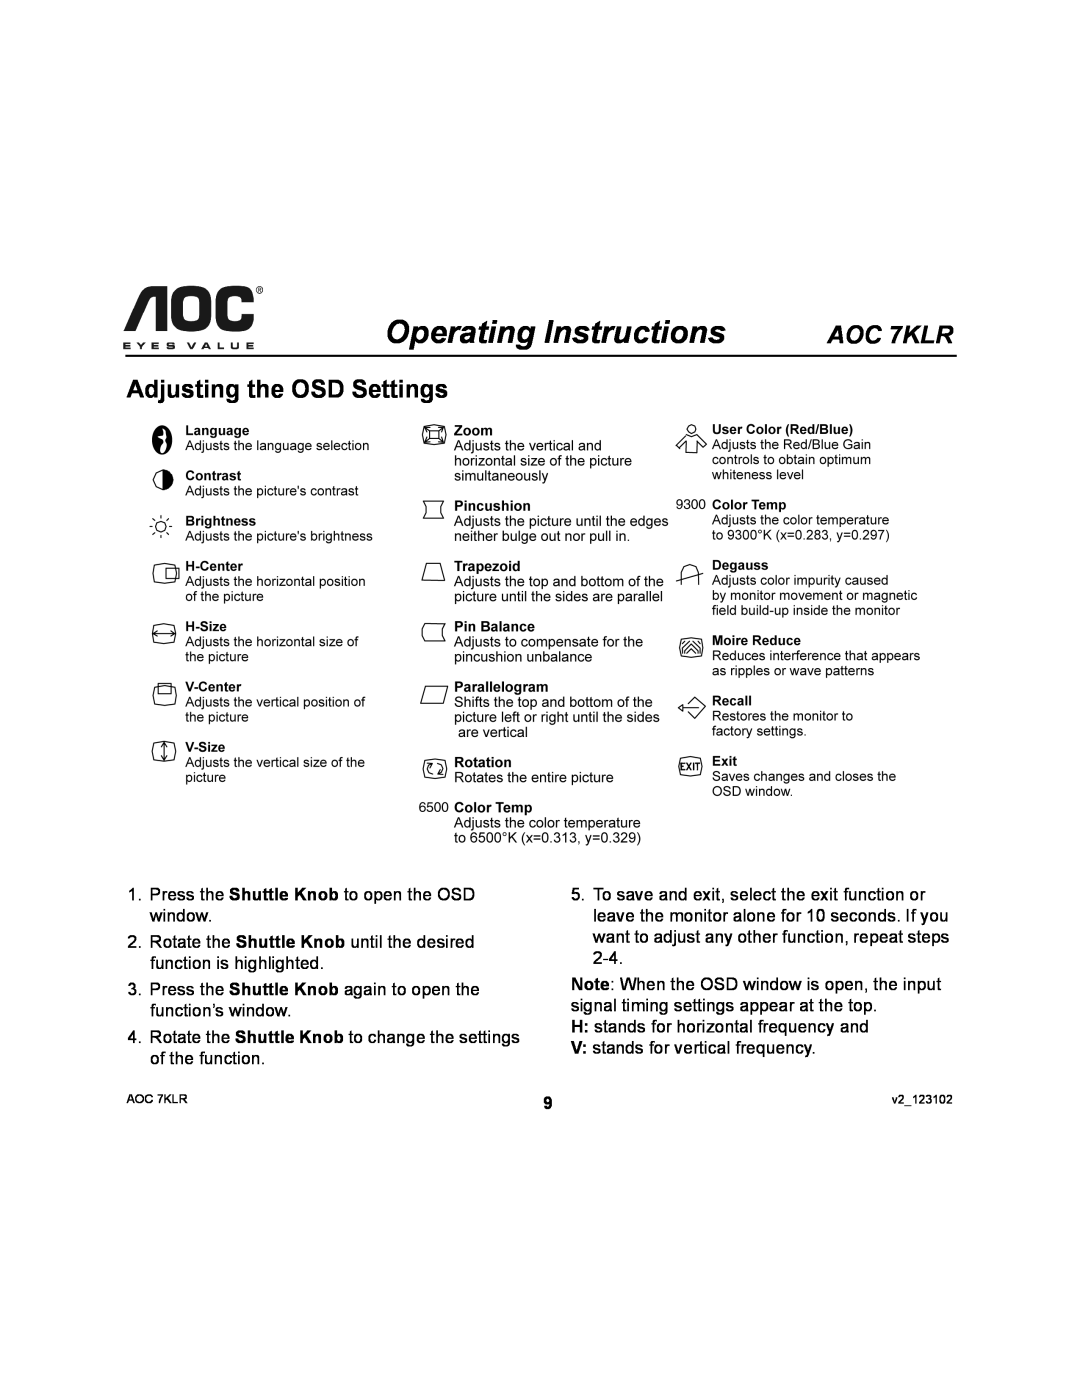 AOC user manual Adjusting the OSD Settings, Operating Instructions, AOC 7KLR 